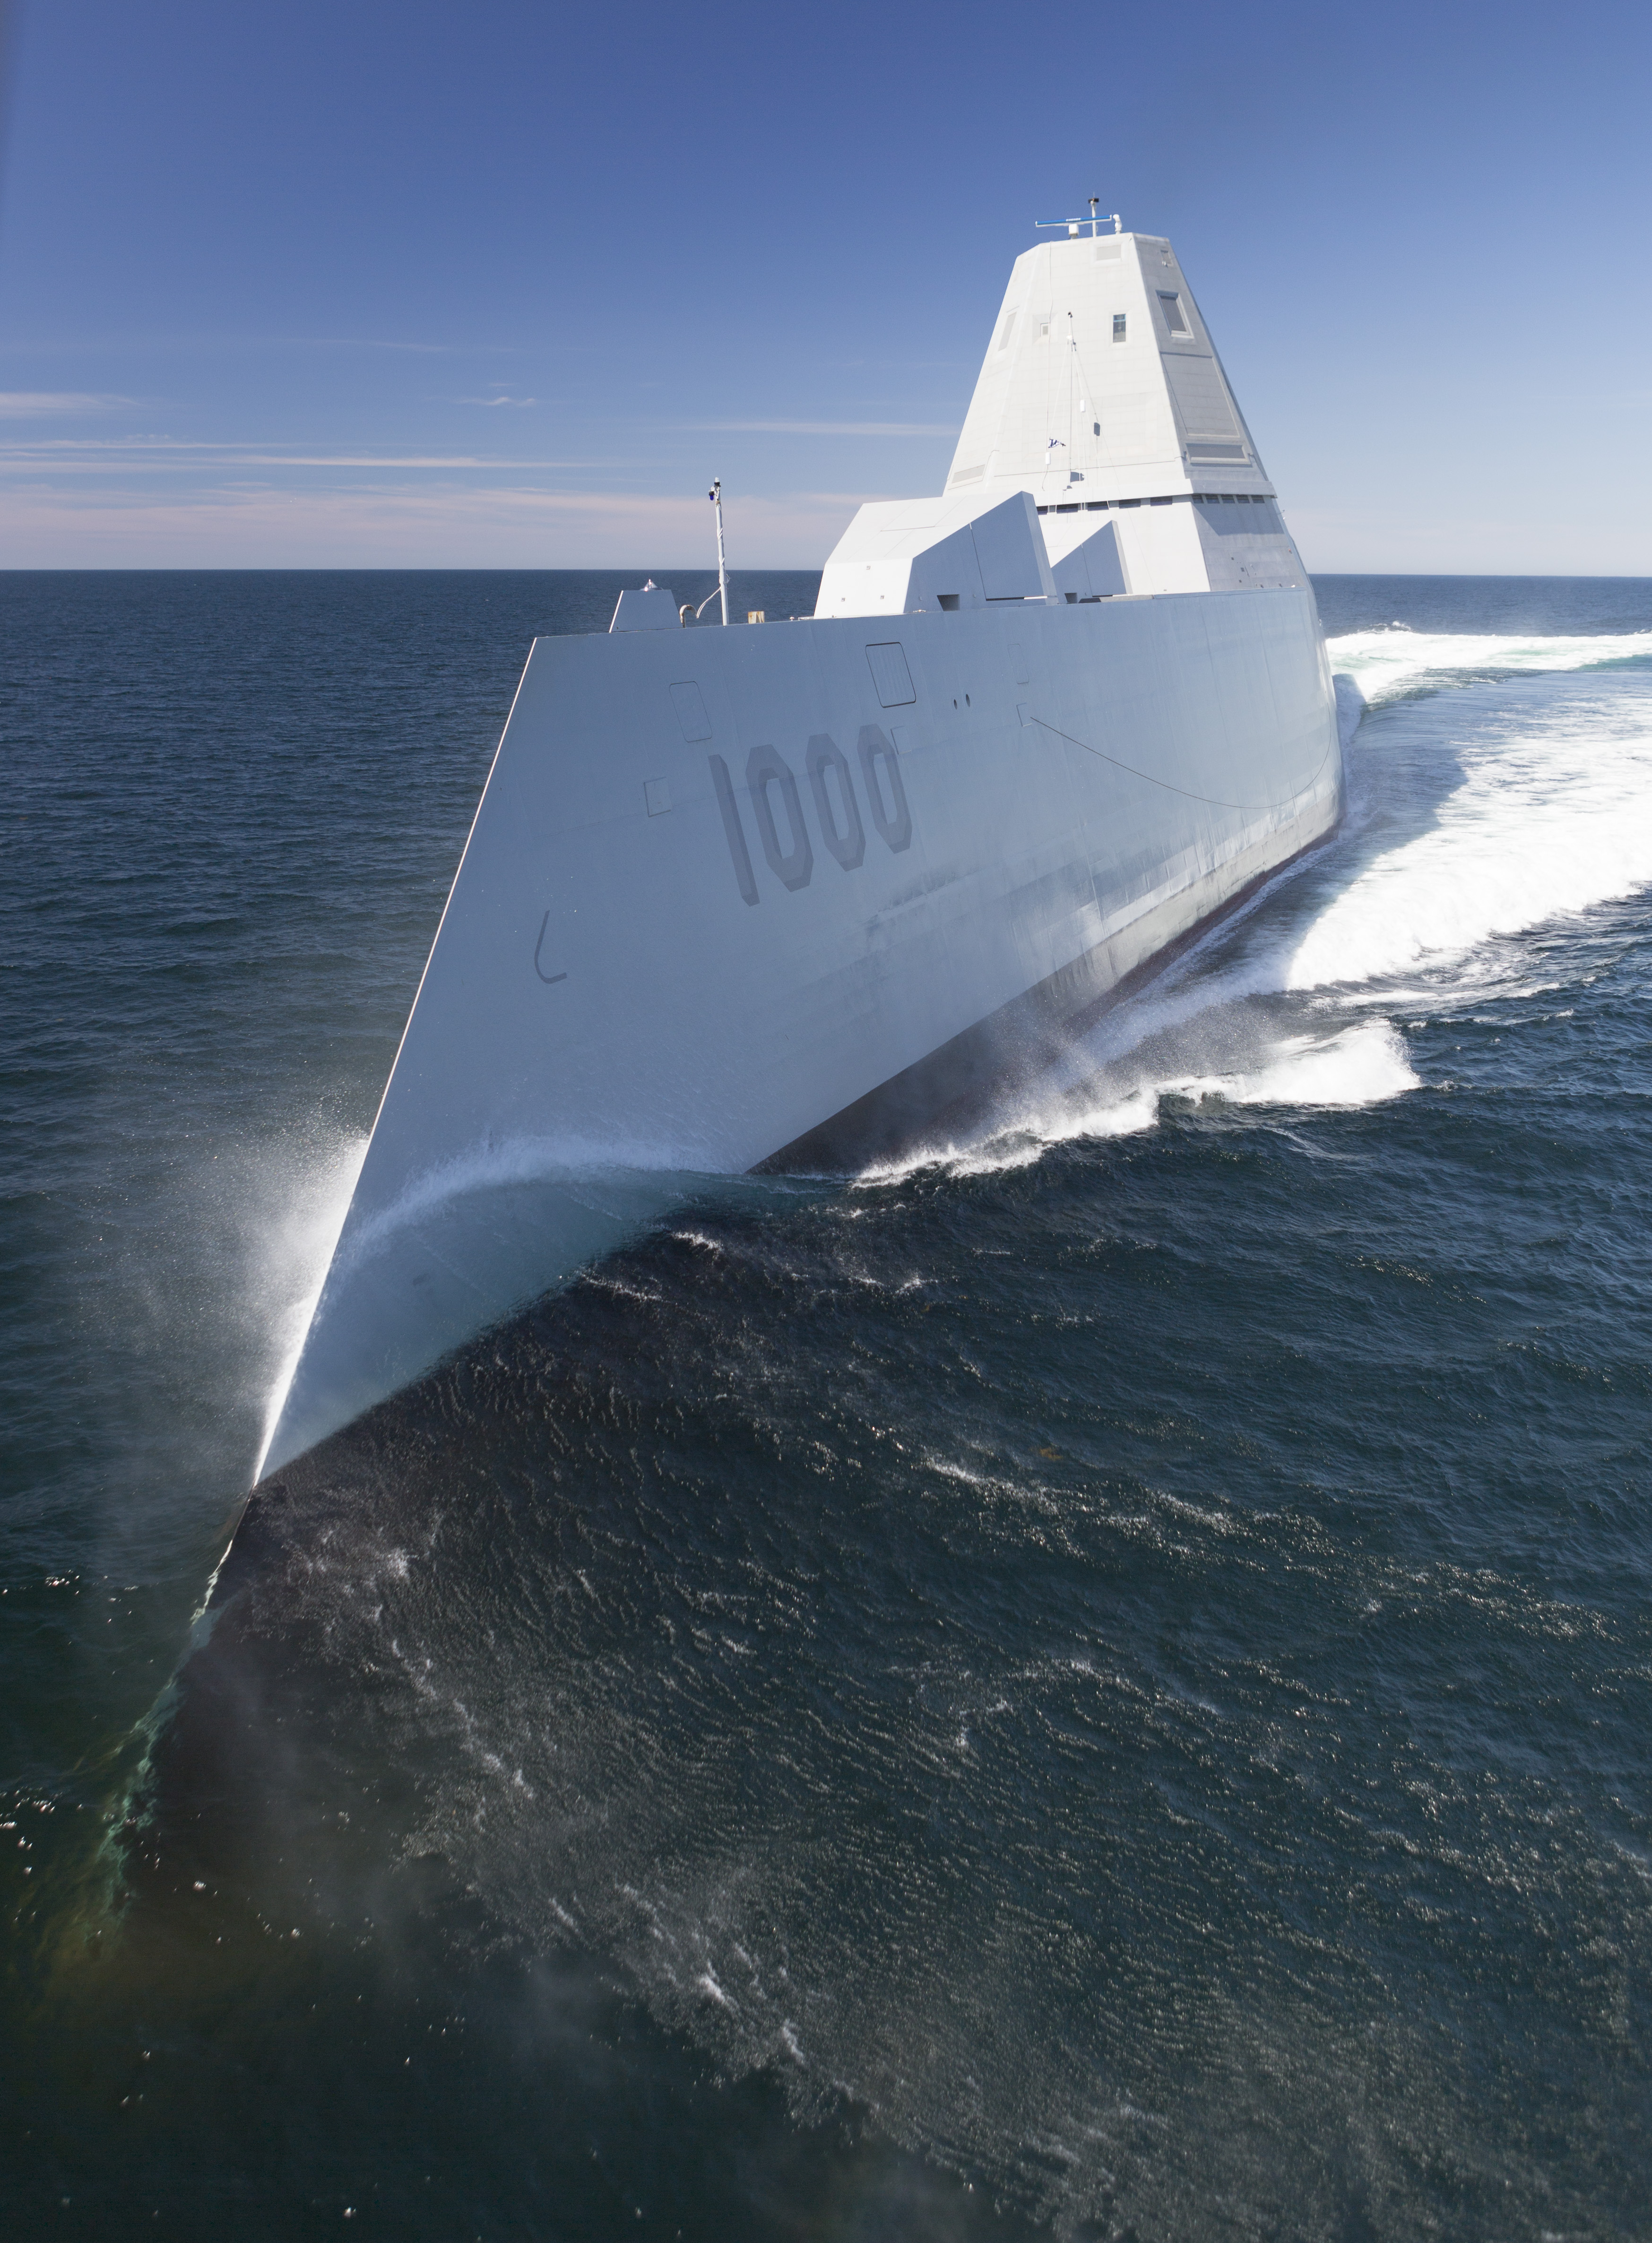 Zumwalt (DDG 1000) transits the Atlantic Ocean on April 21, 2016. US Navy Photo